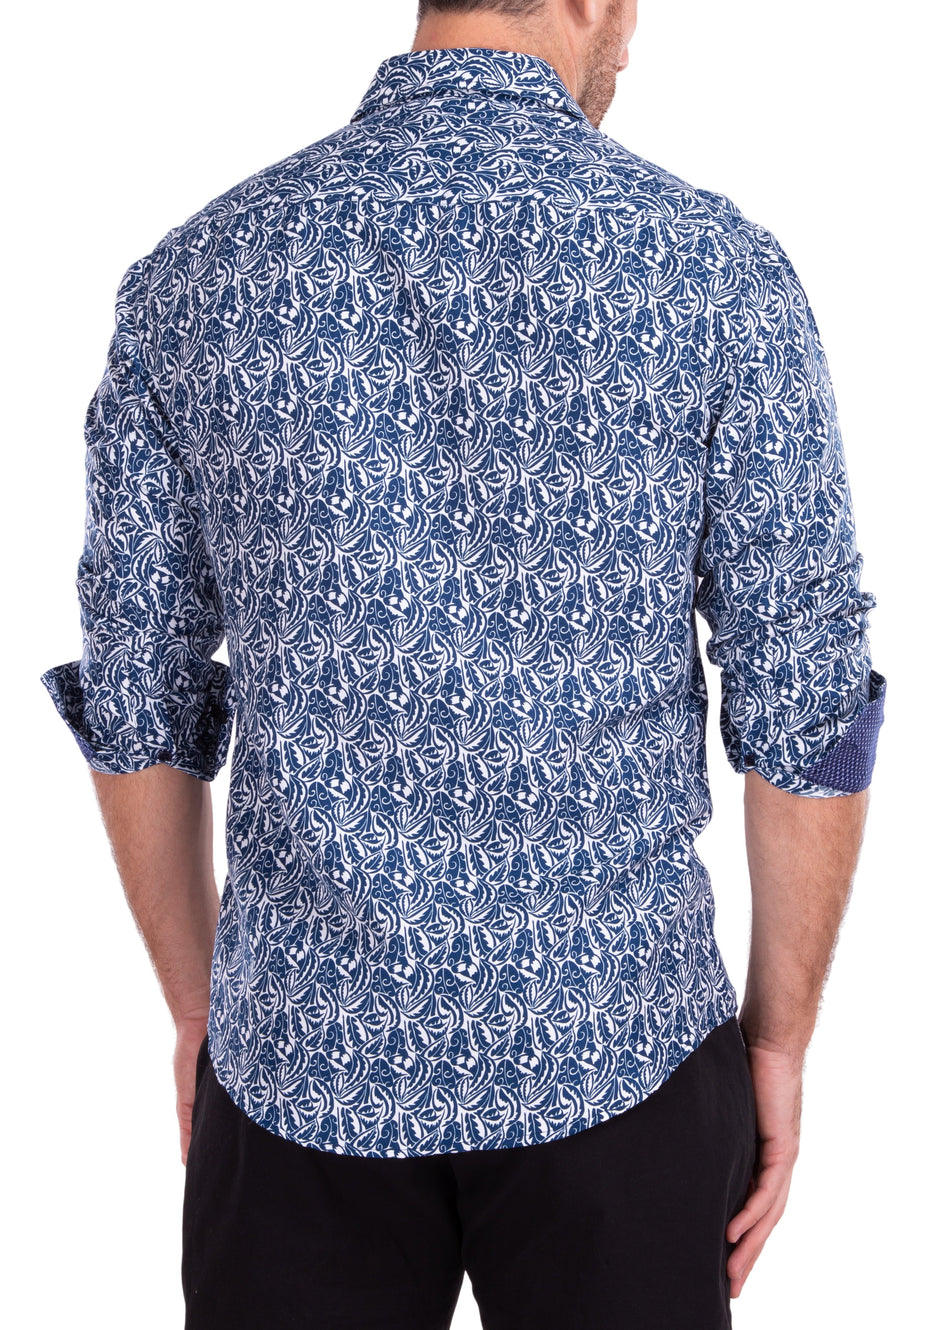 212319 - Blue Long Sleeve Shirt